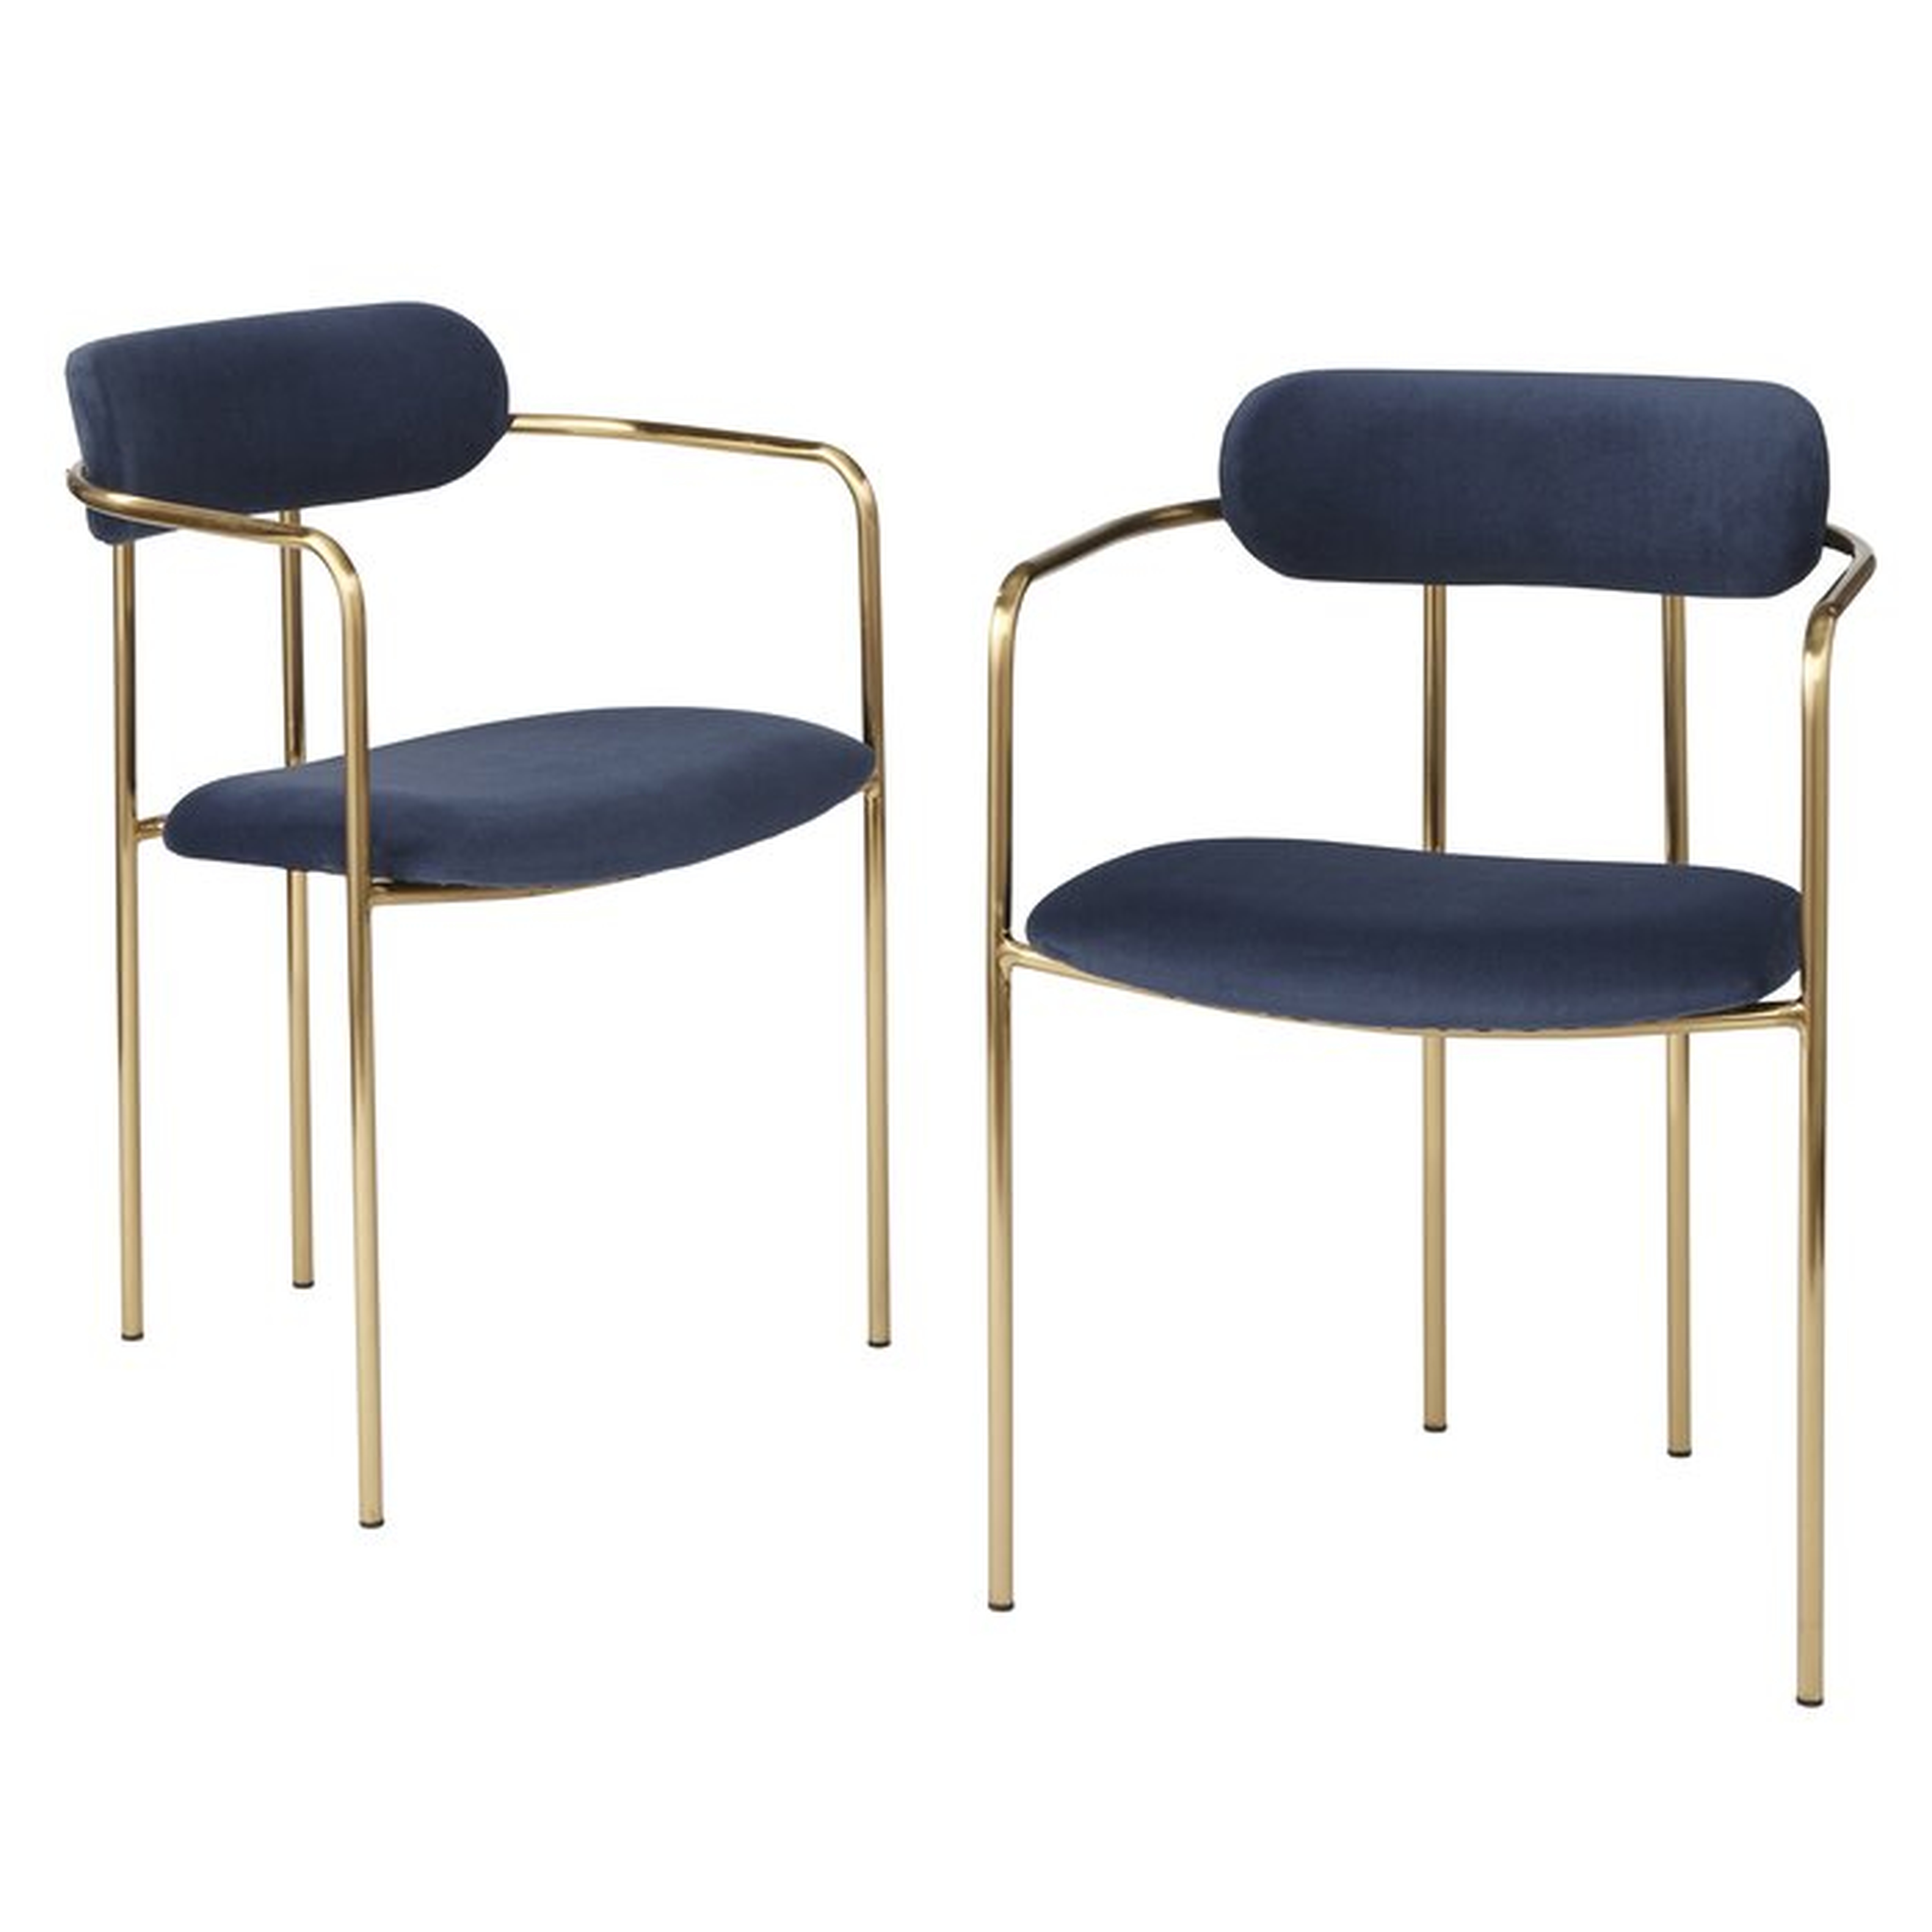 Carrigan Upholstered Dining Chair - Set of 2 - Wayfair